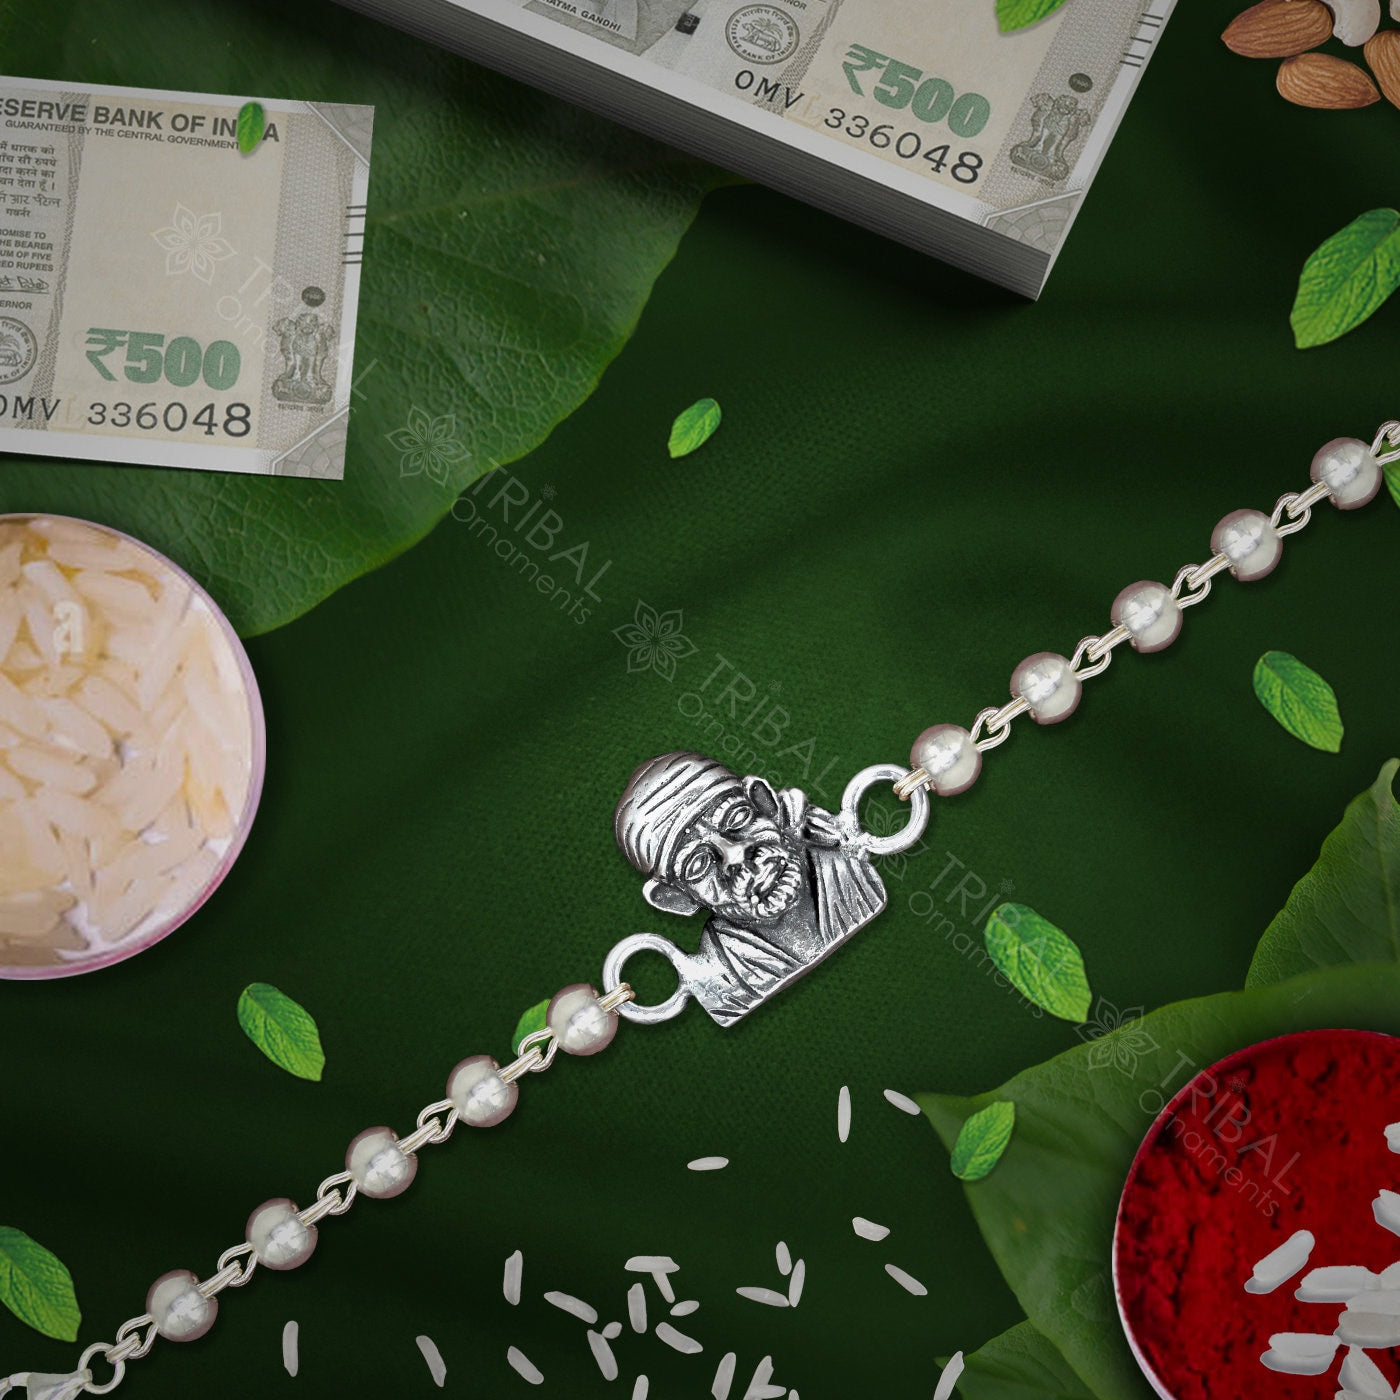 Amazing Sai baba face design 925 sterling silver Rakhi bracelet in rudraksh/black basil/white basil and silver beaded chain rk276 - TRIBAL ORNAMENTS